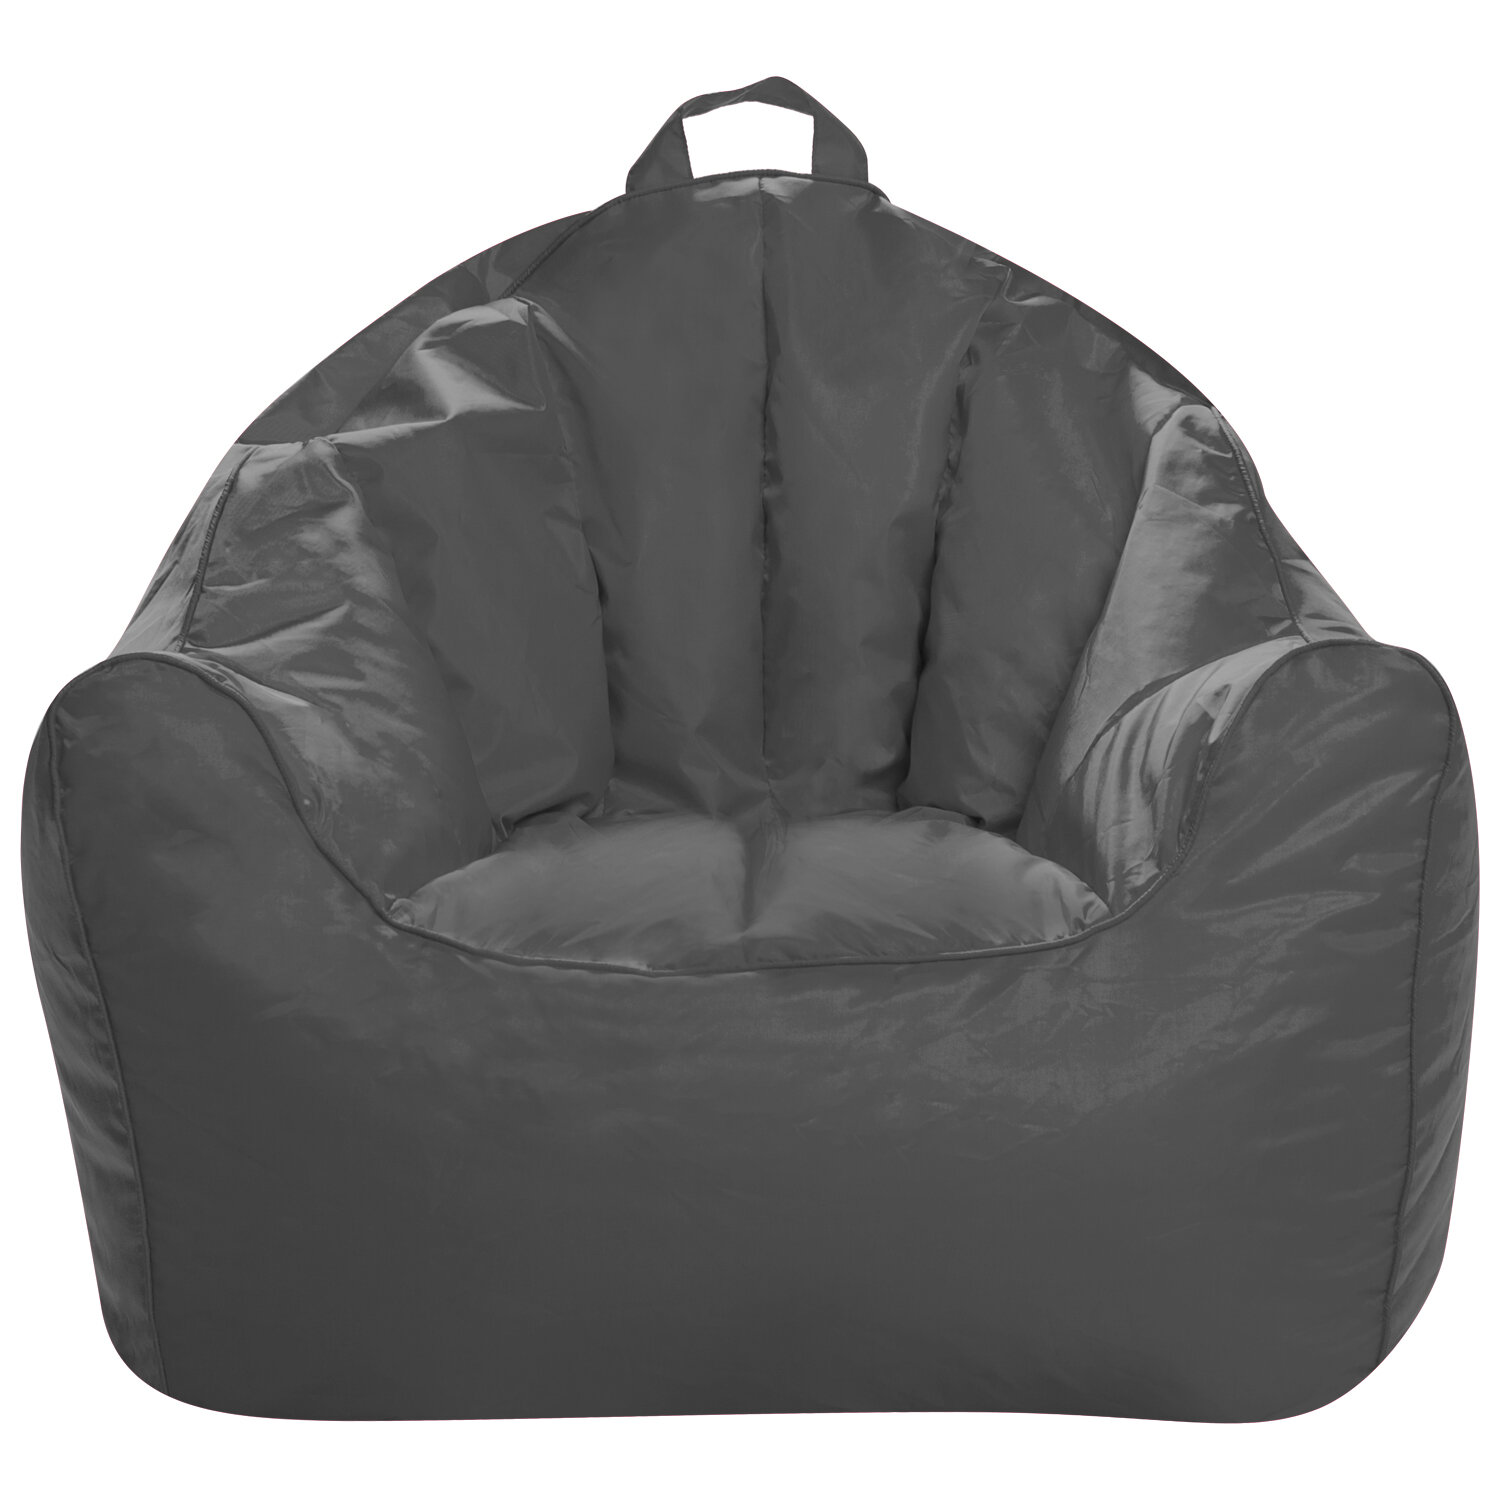 Malibu Standard Bean Bag Chair